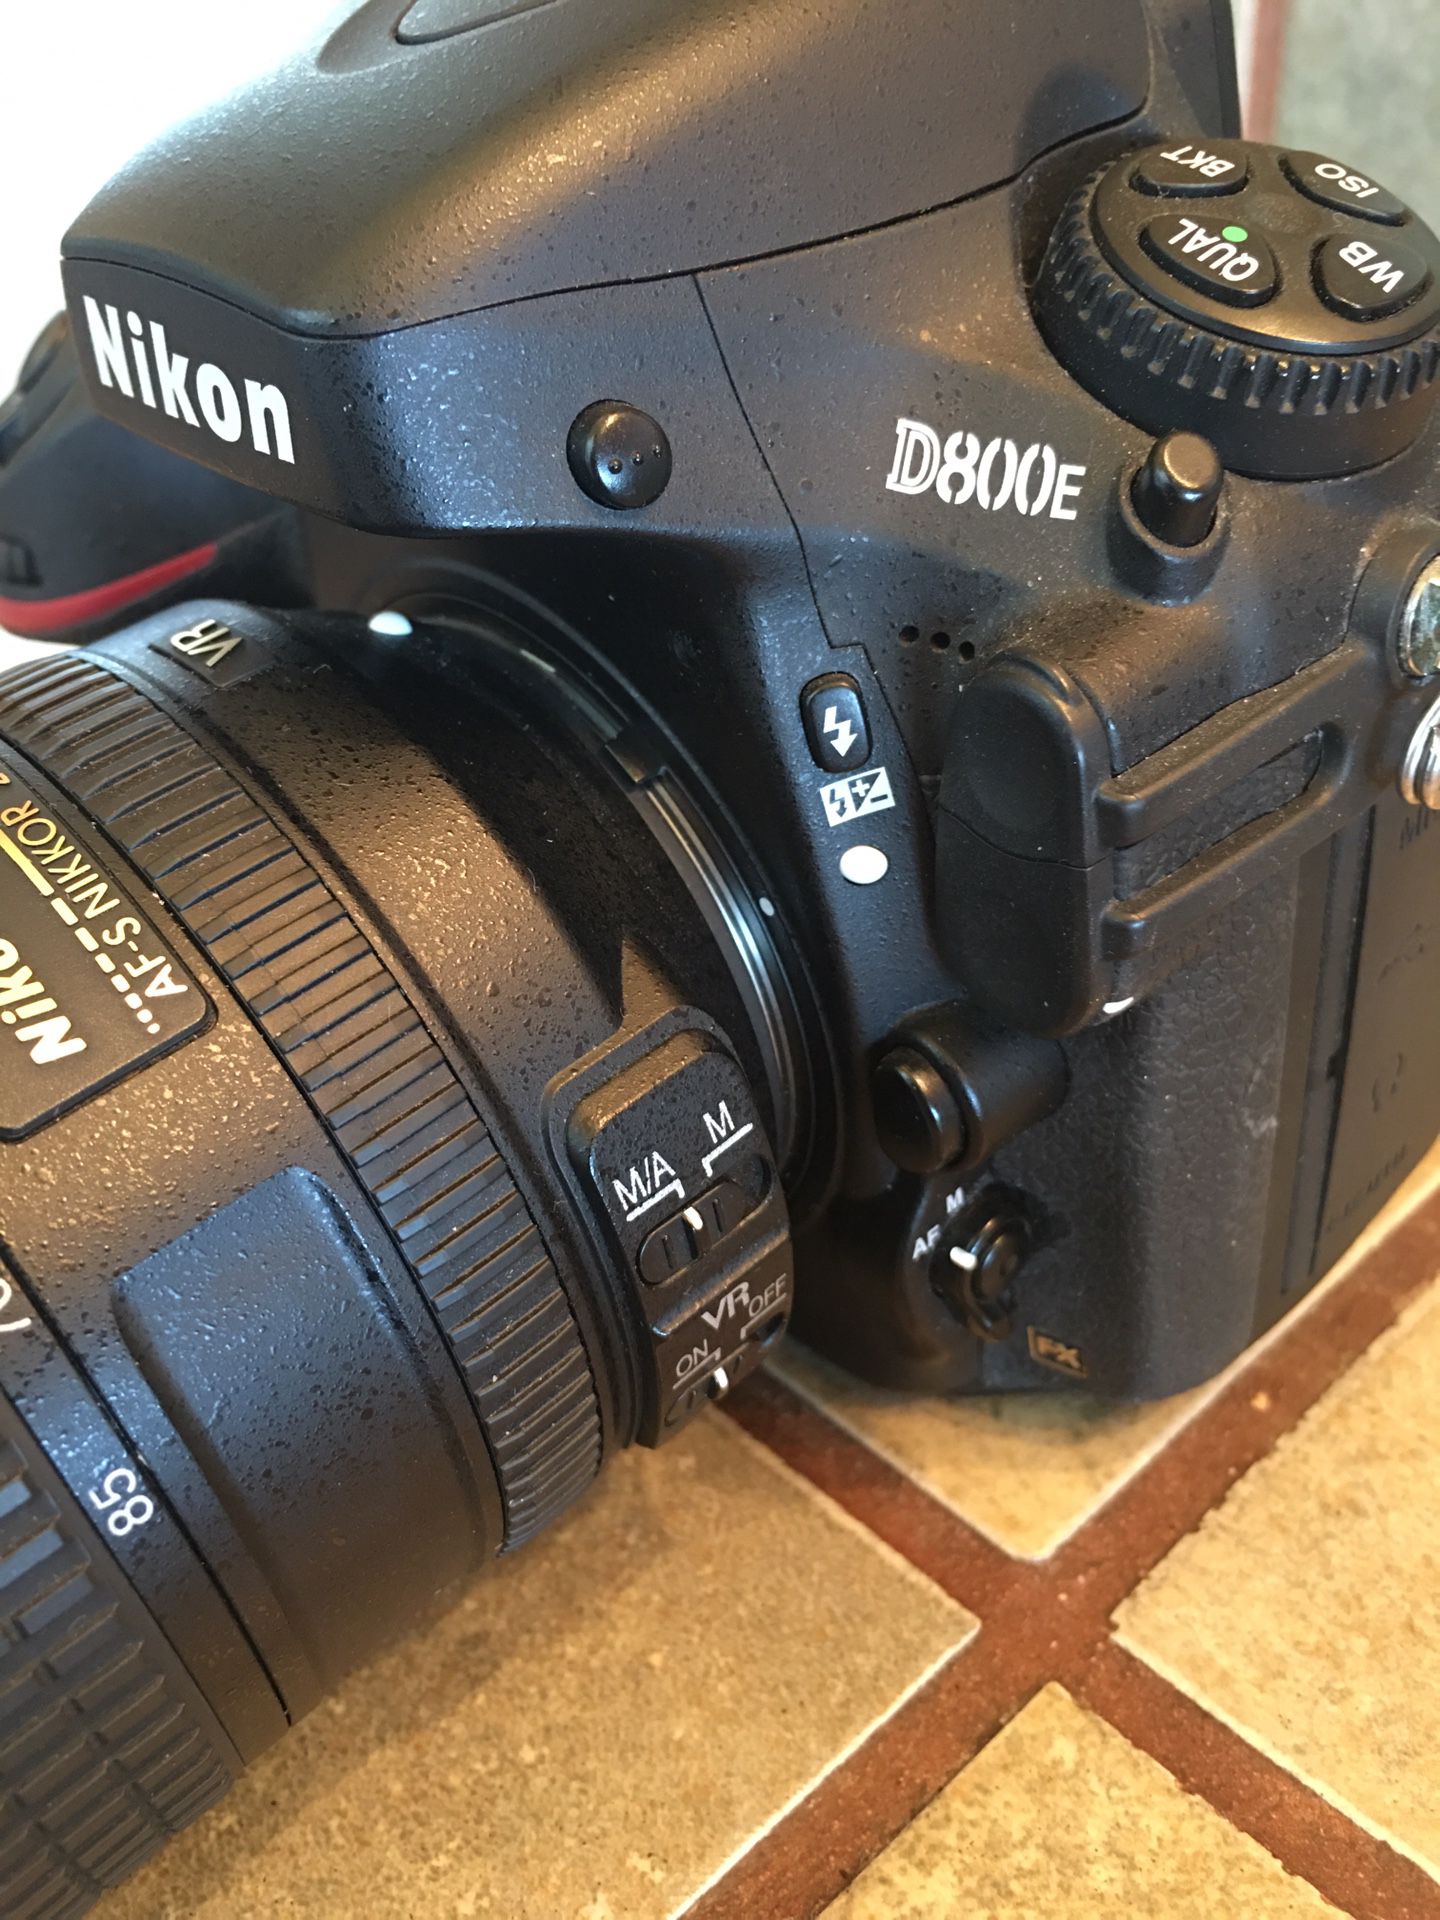 Nikon D800e with Nikon 24-85mm 3.5-4.5G VR lens